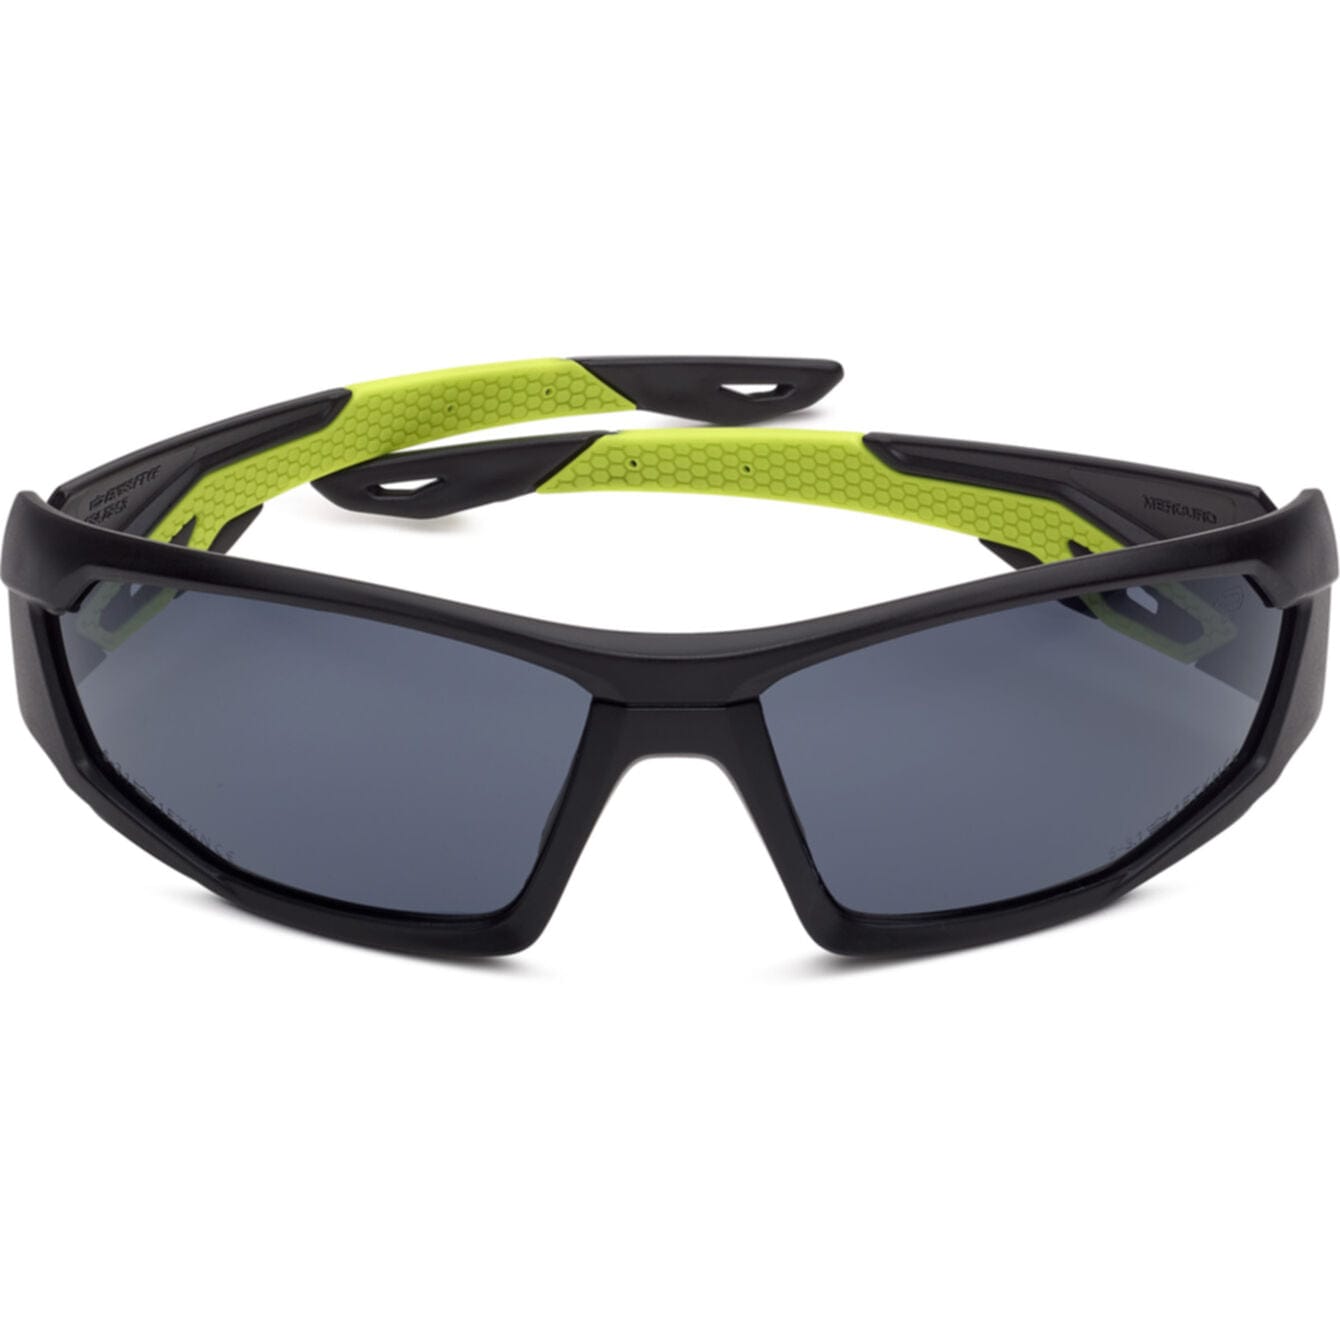 Bolle Mercuro Safety Glasses with Smoke Platinum Anti-Fog Lens